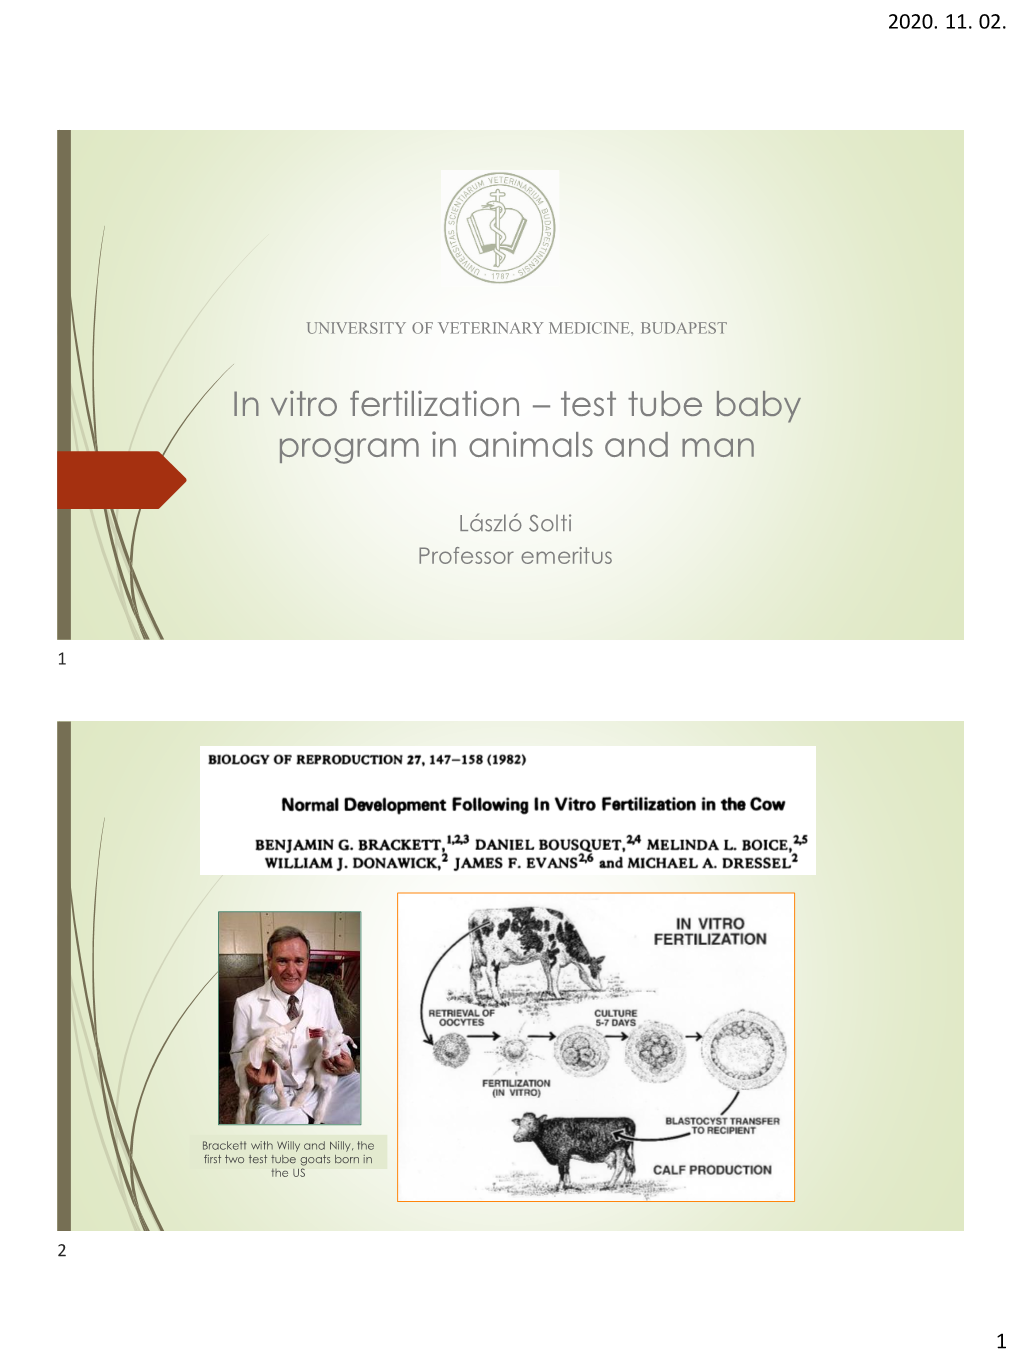 In Vitro Fertilization – Test Tube Baby Program in Animals and Man